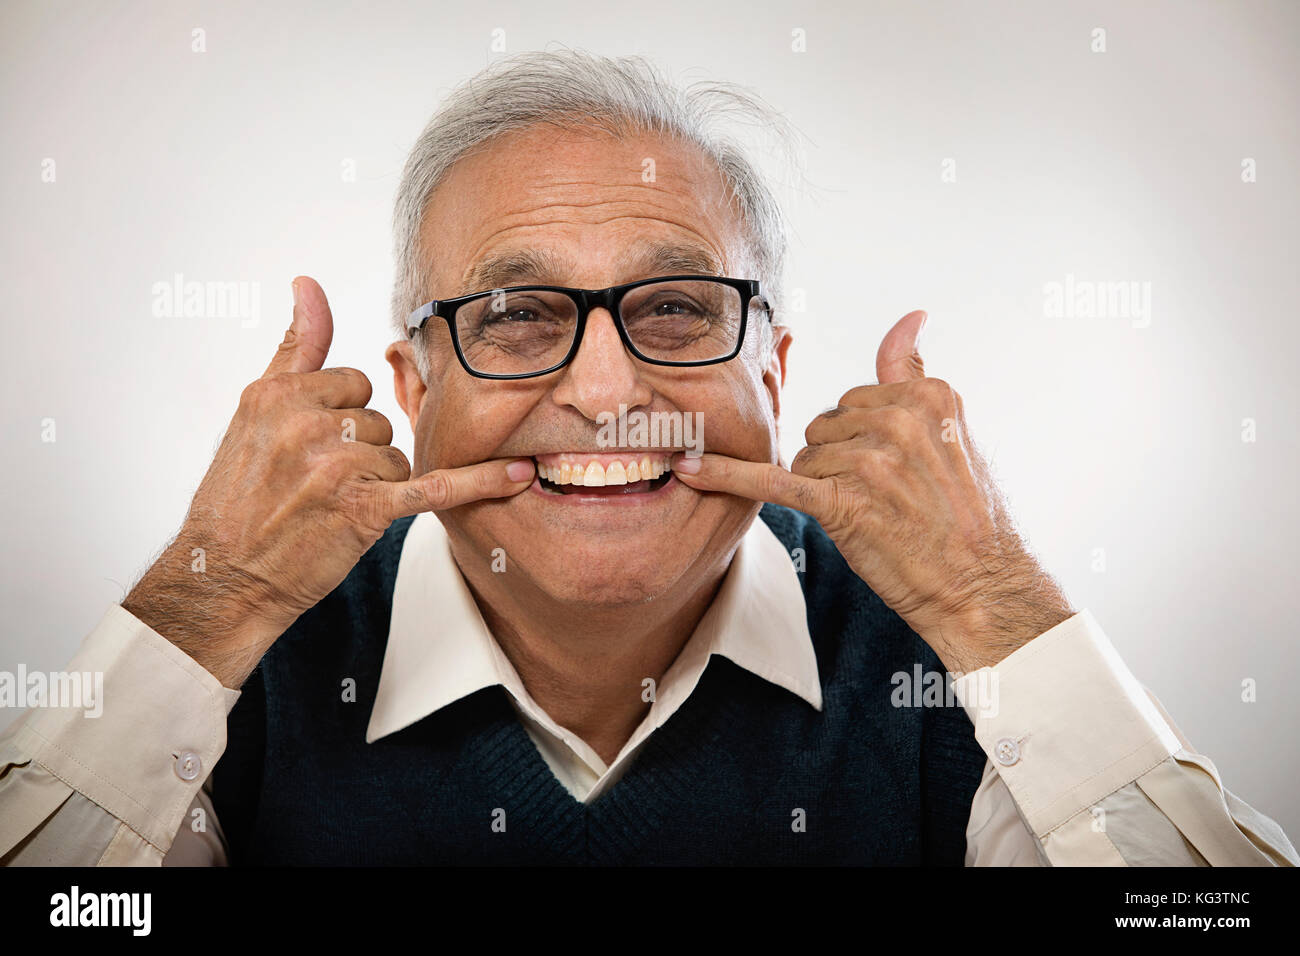 Senior man making funny face Stock Photo